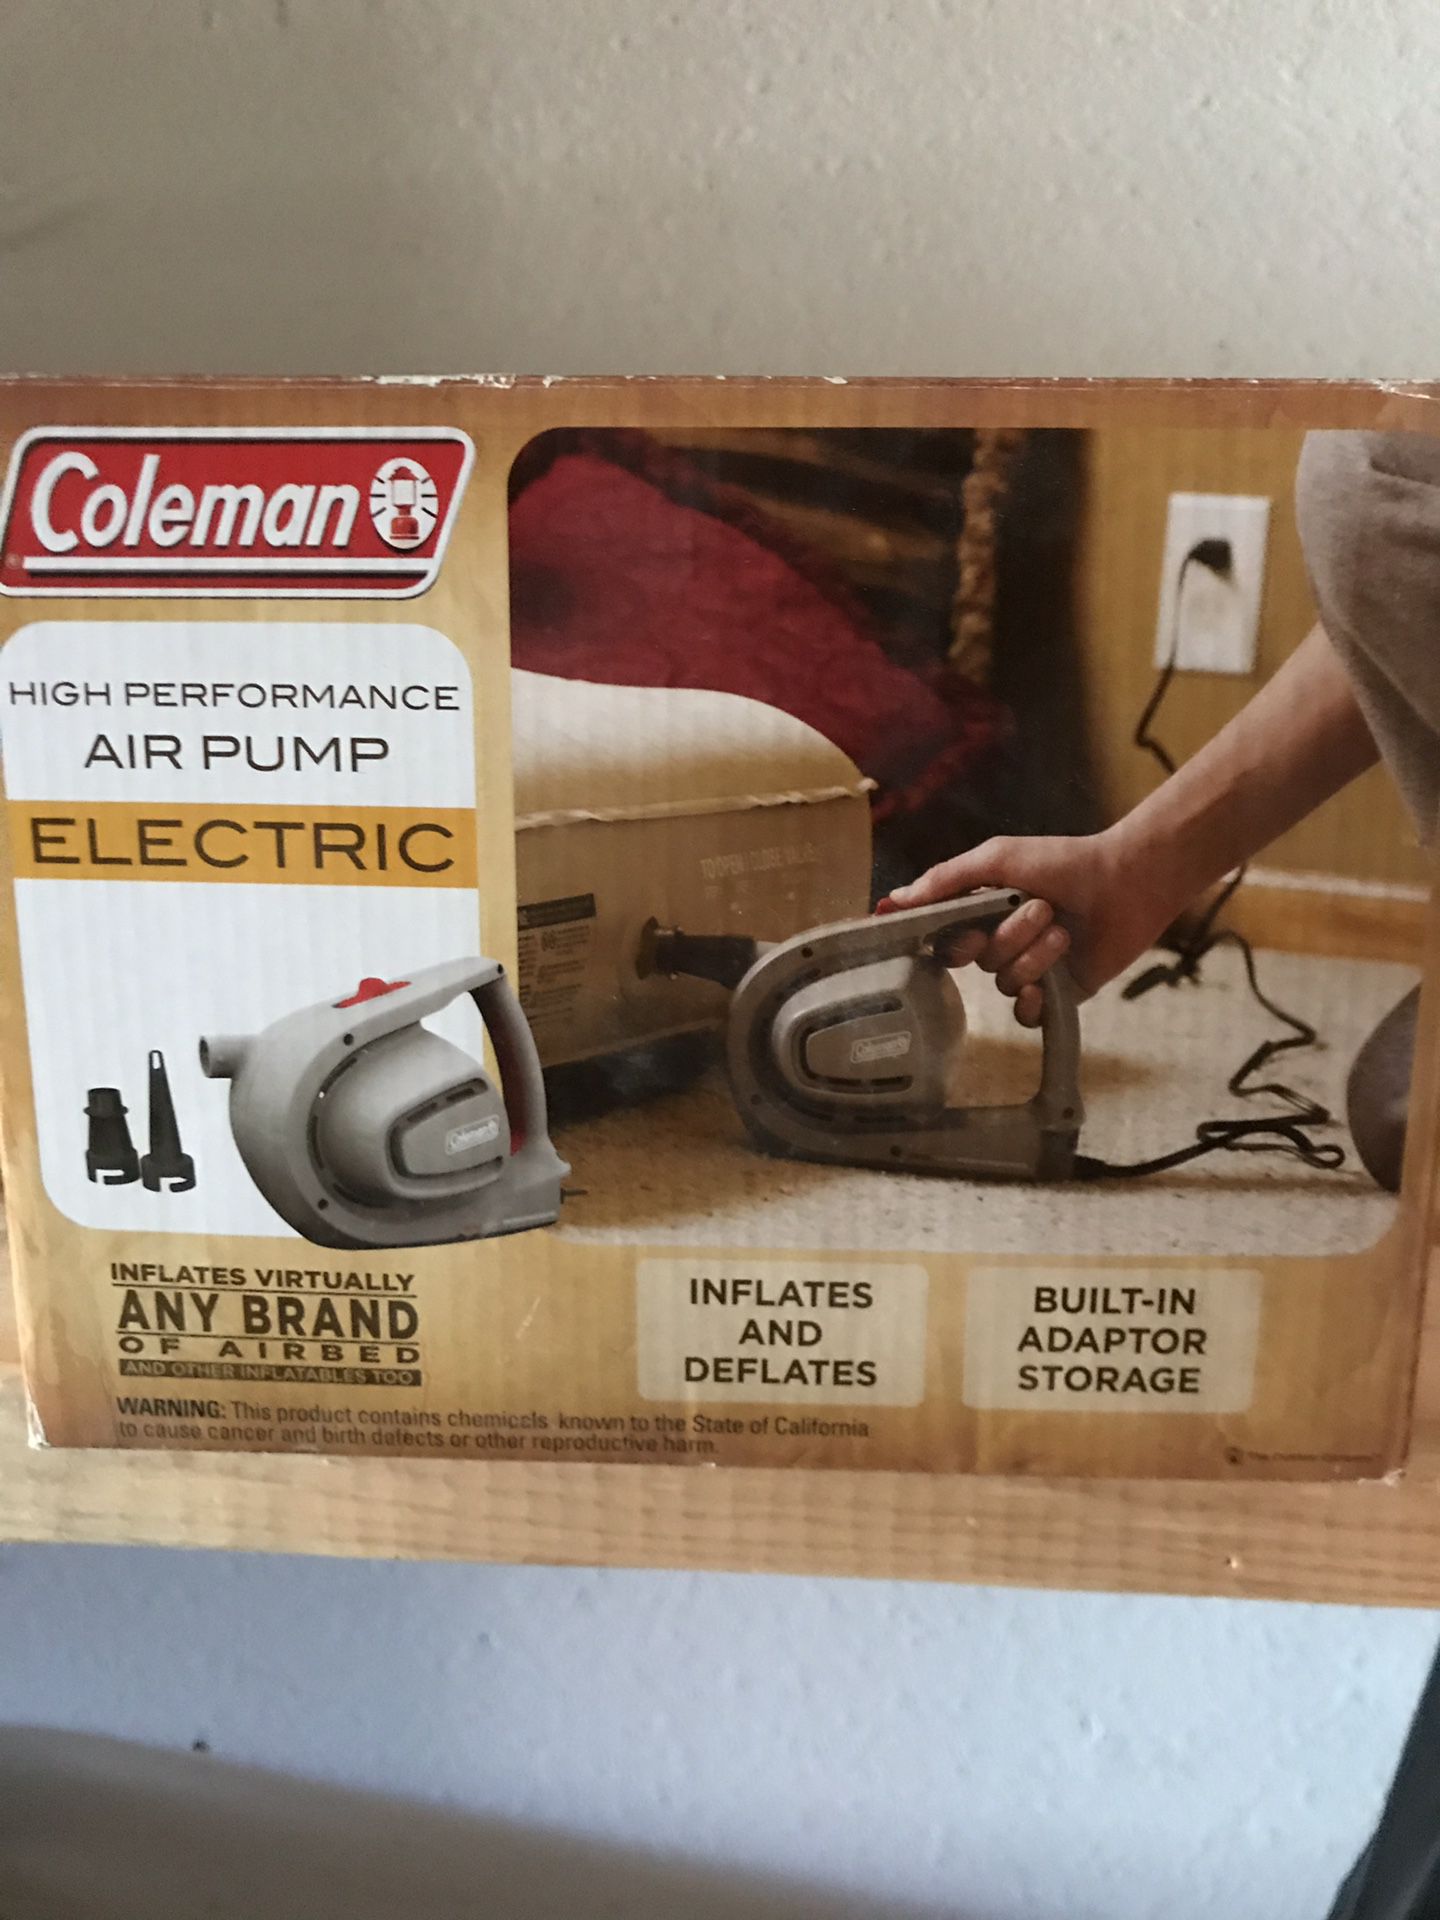 Electric handheld pump. Great for air mattresses!